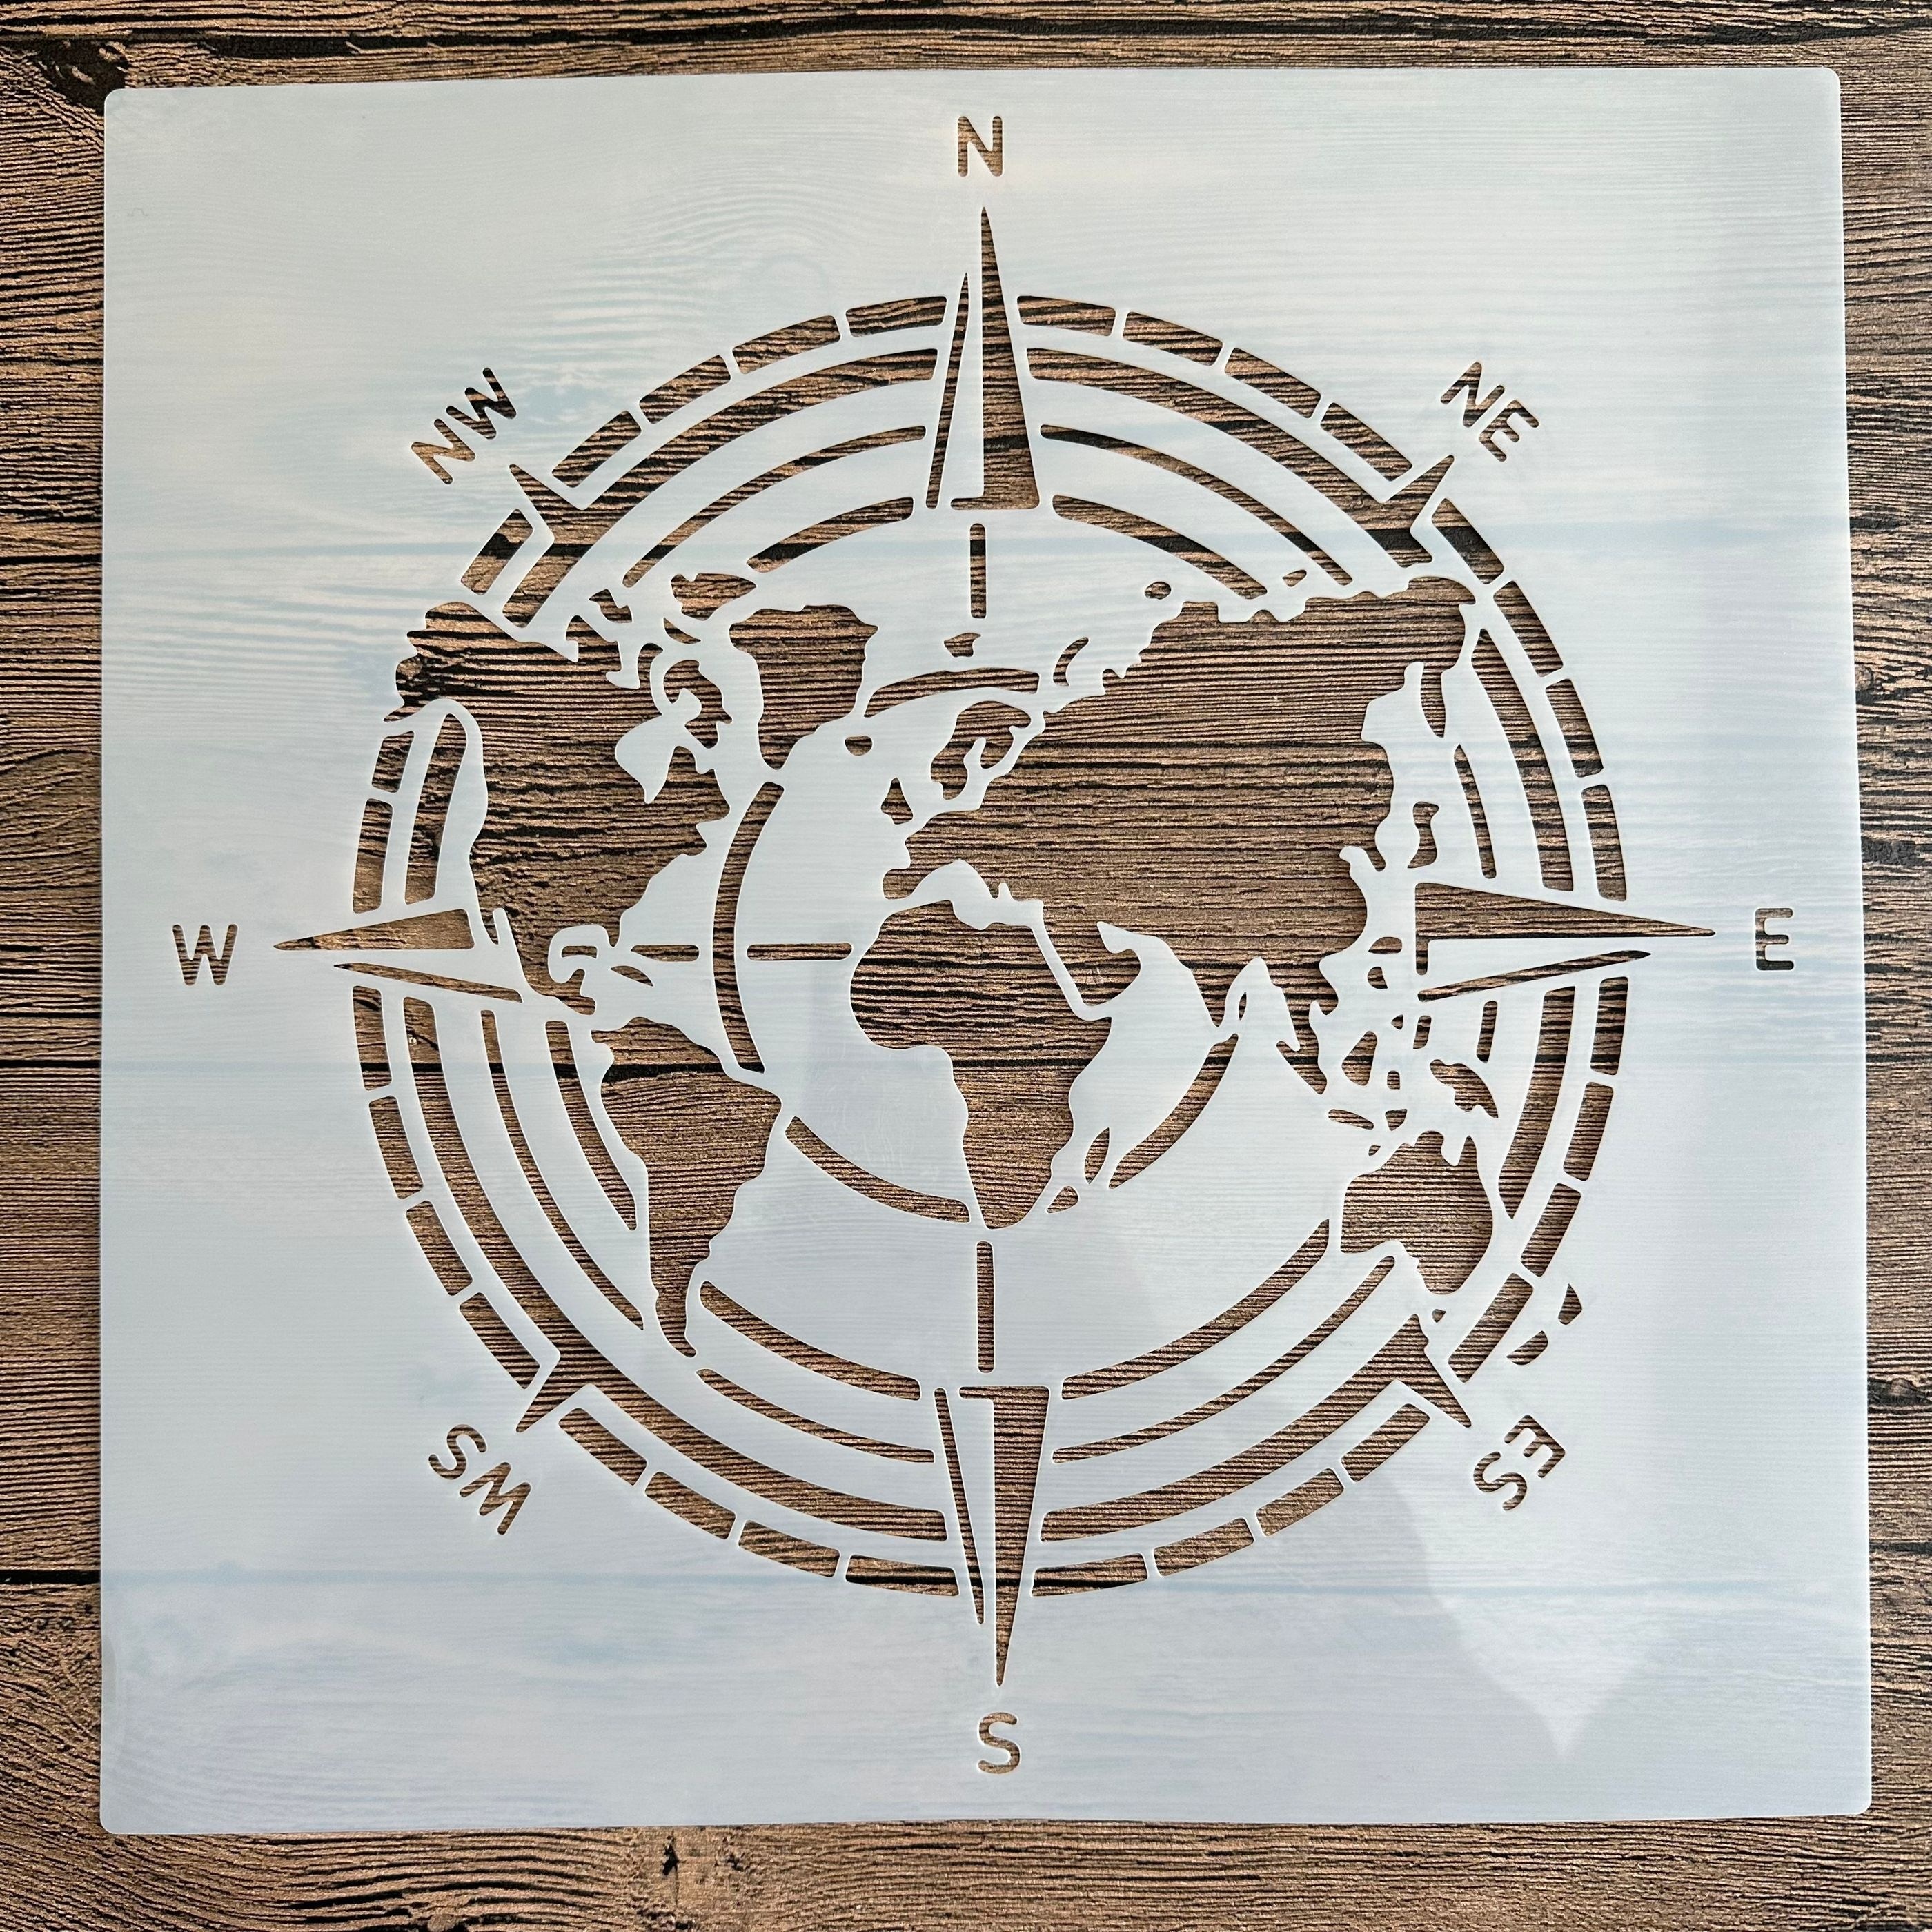 

12x12" Reusable Diy Stencil For Wood, Fabric & Walls - Compass Navigation Chart Design, Durable Pet Plastic Craft Template